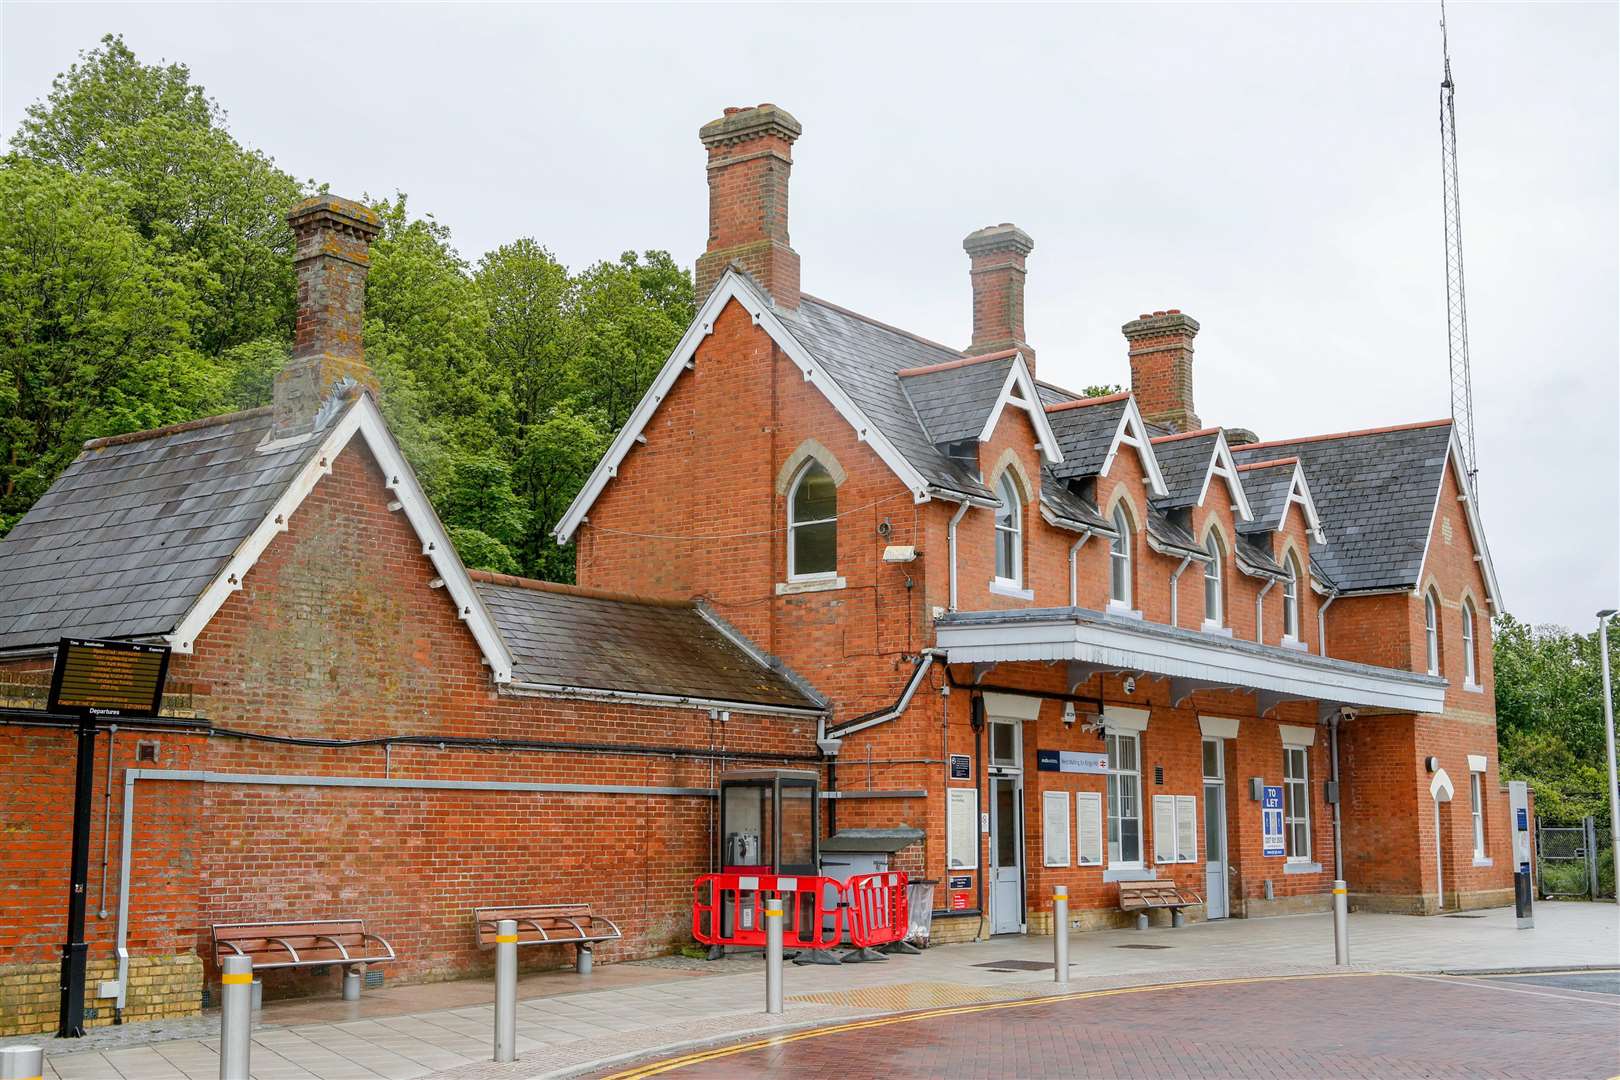 West Malling Railway Station